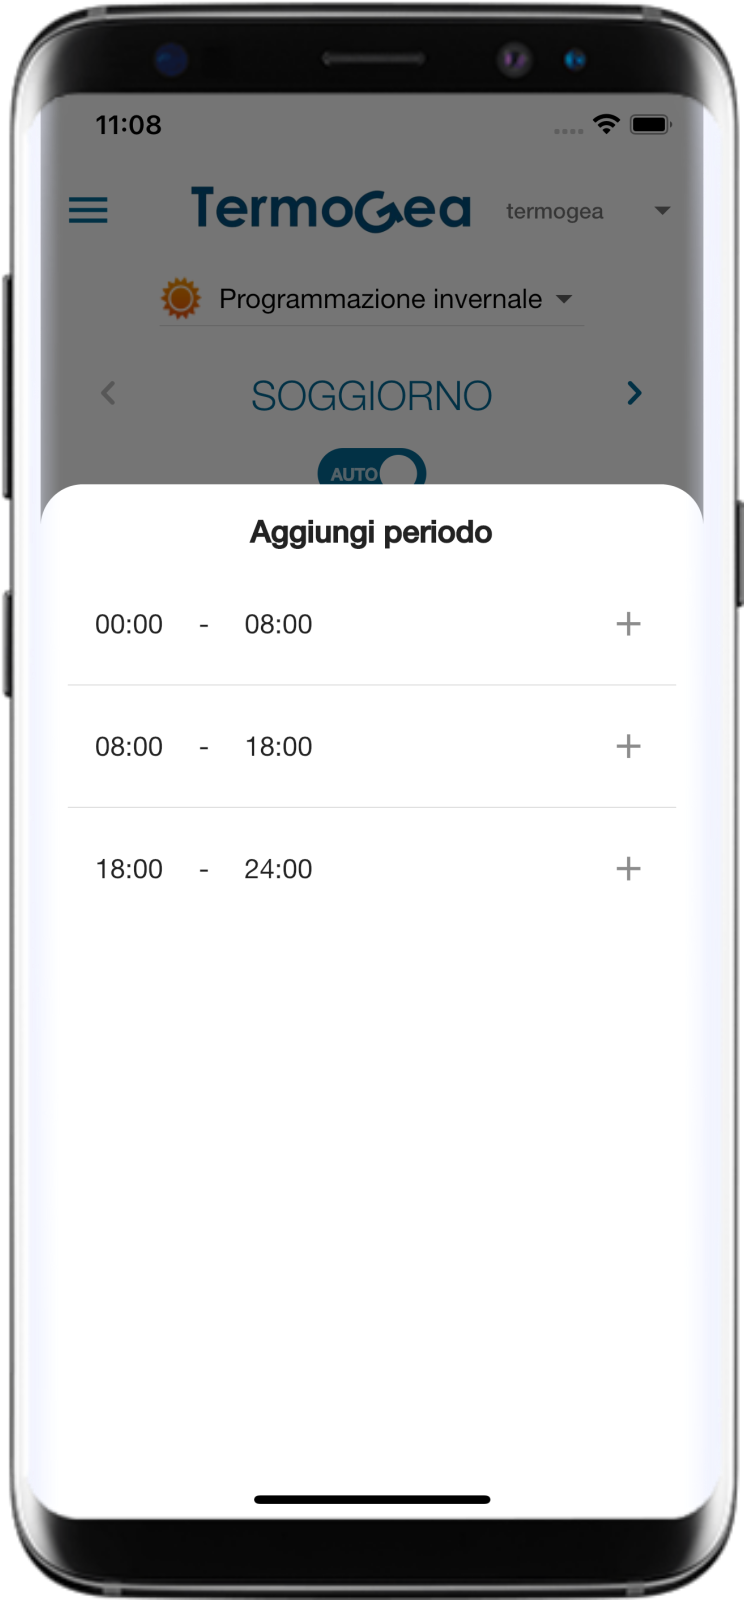 Termogea App, add time slot.